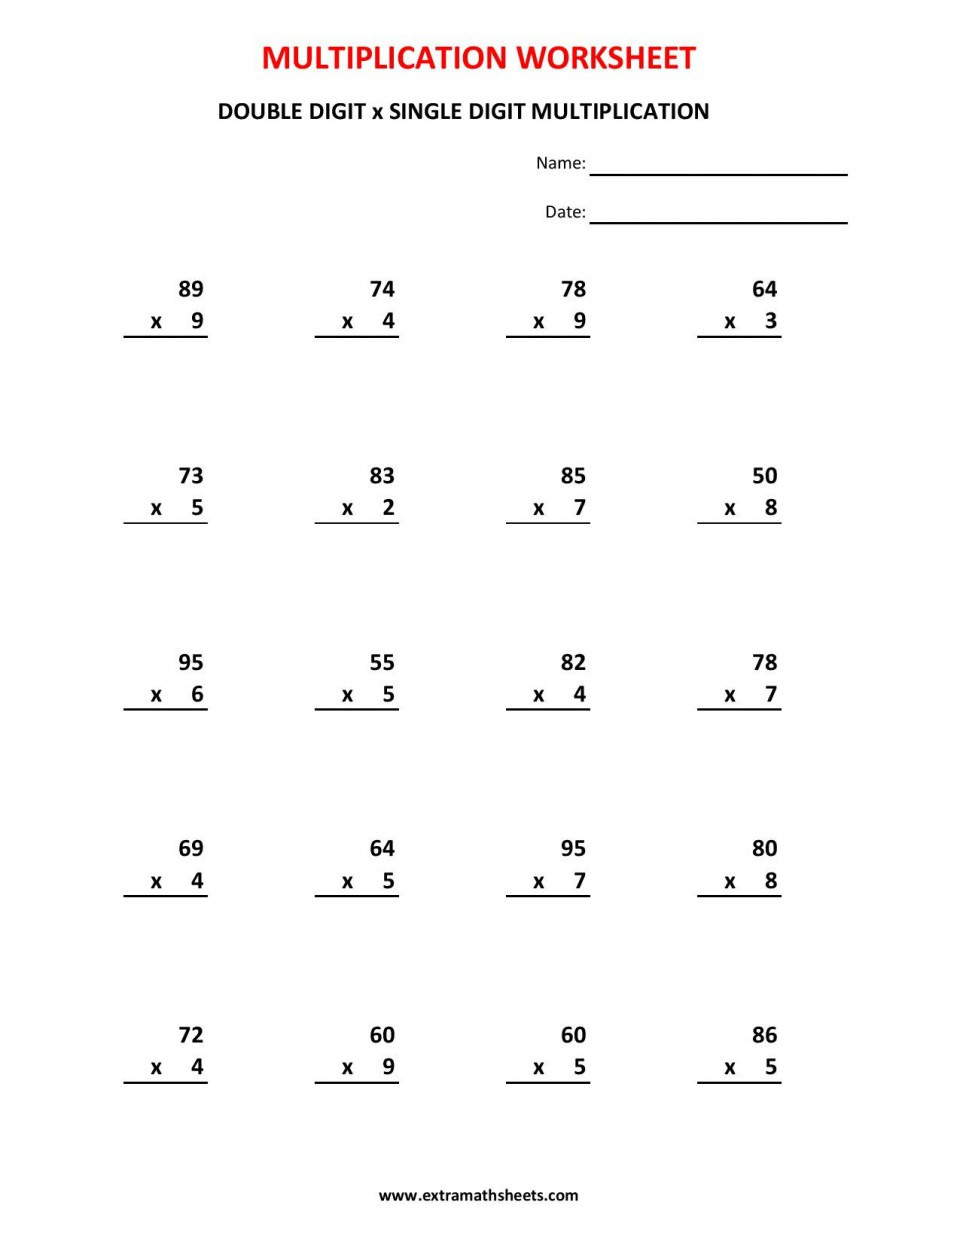 multiplication-double-digit-worksheet